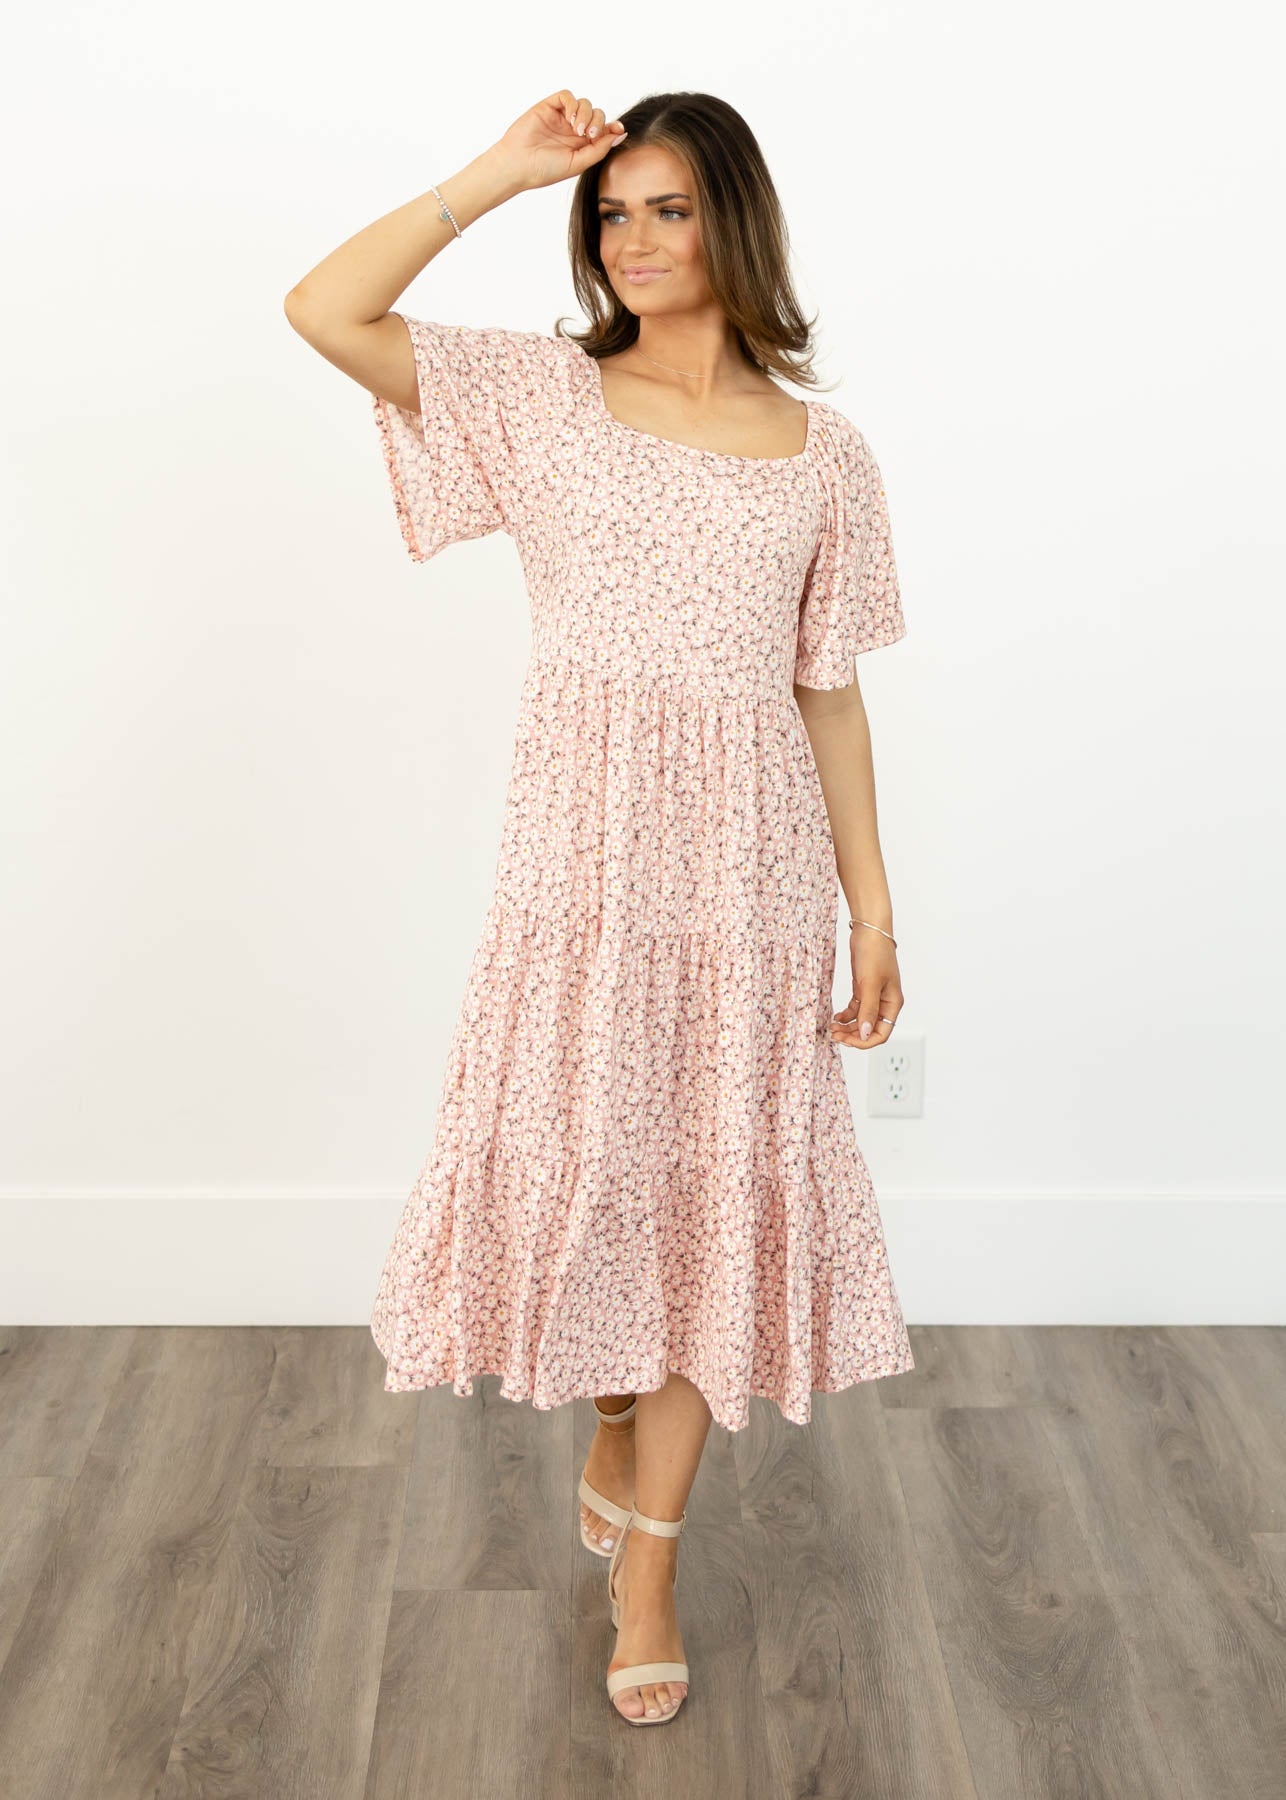 Short sleeve blush floral dress